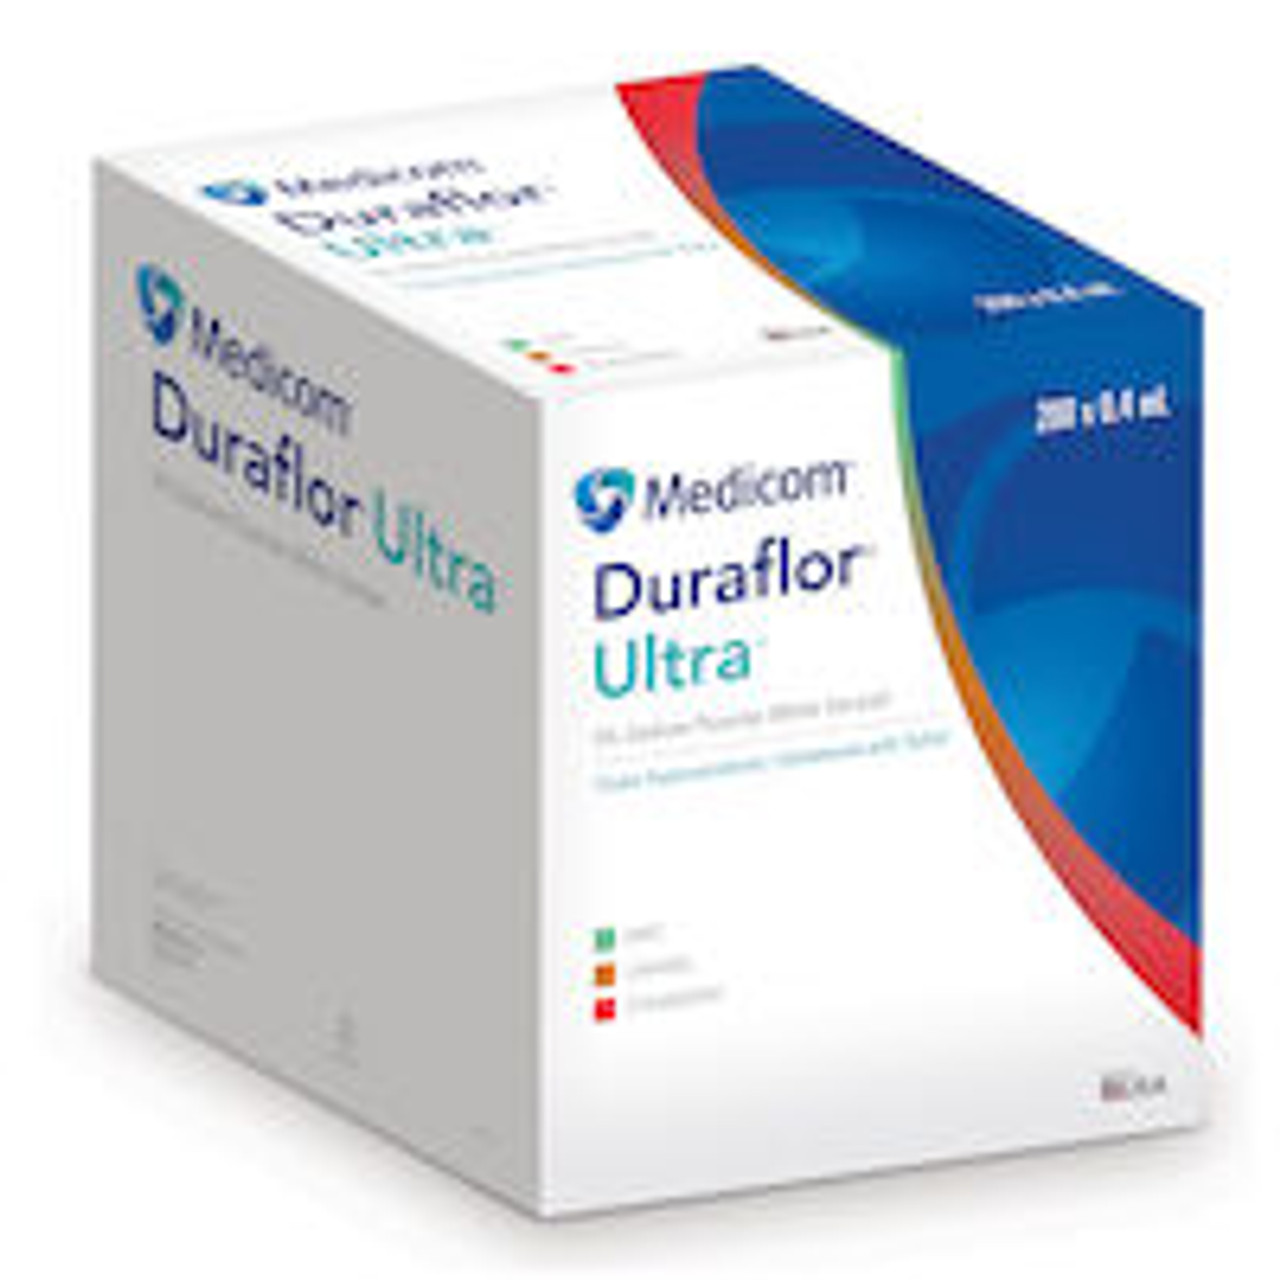 MEDICOM DURAFLOR ULTRA 5% SODIUM FLUORIDE WHITE VARNISH, 1016-ST200